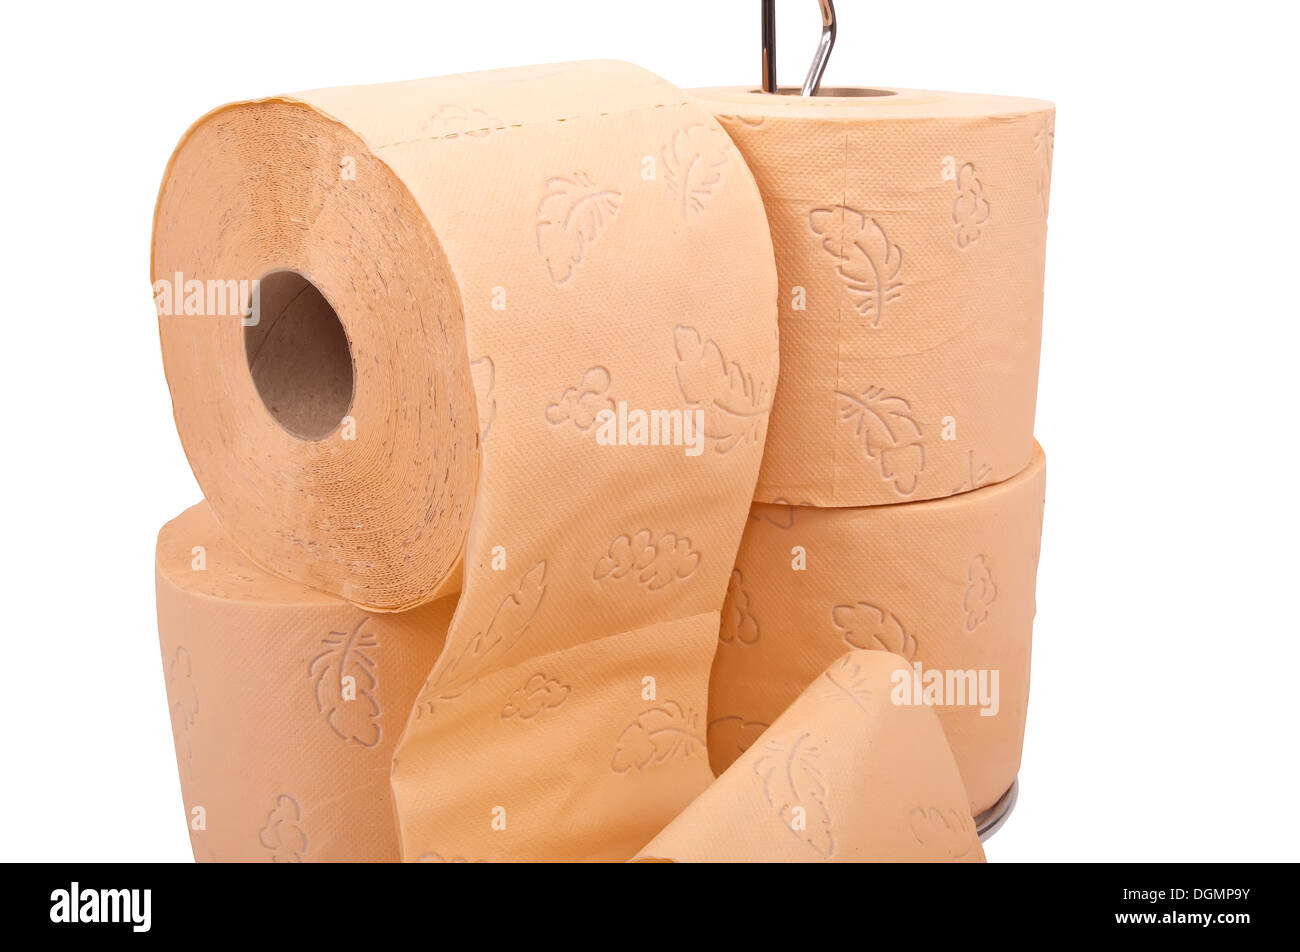 Papier toilette plat 2 plis essential, Renova (x 4)